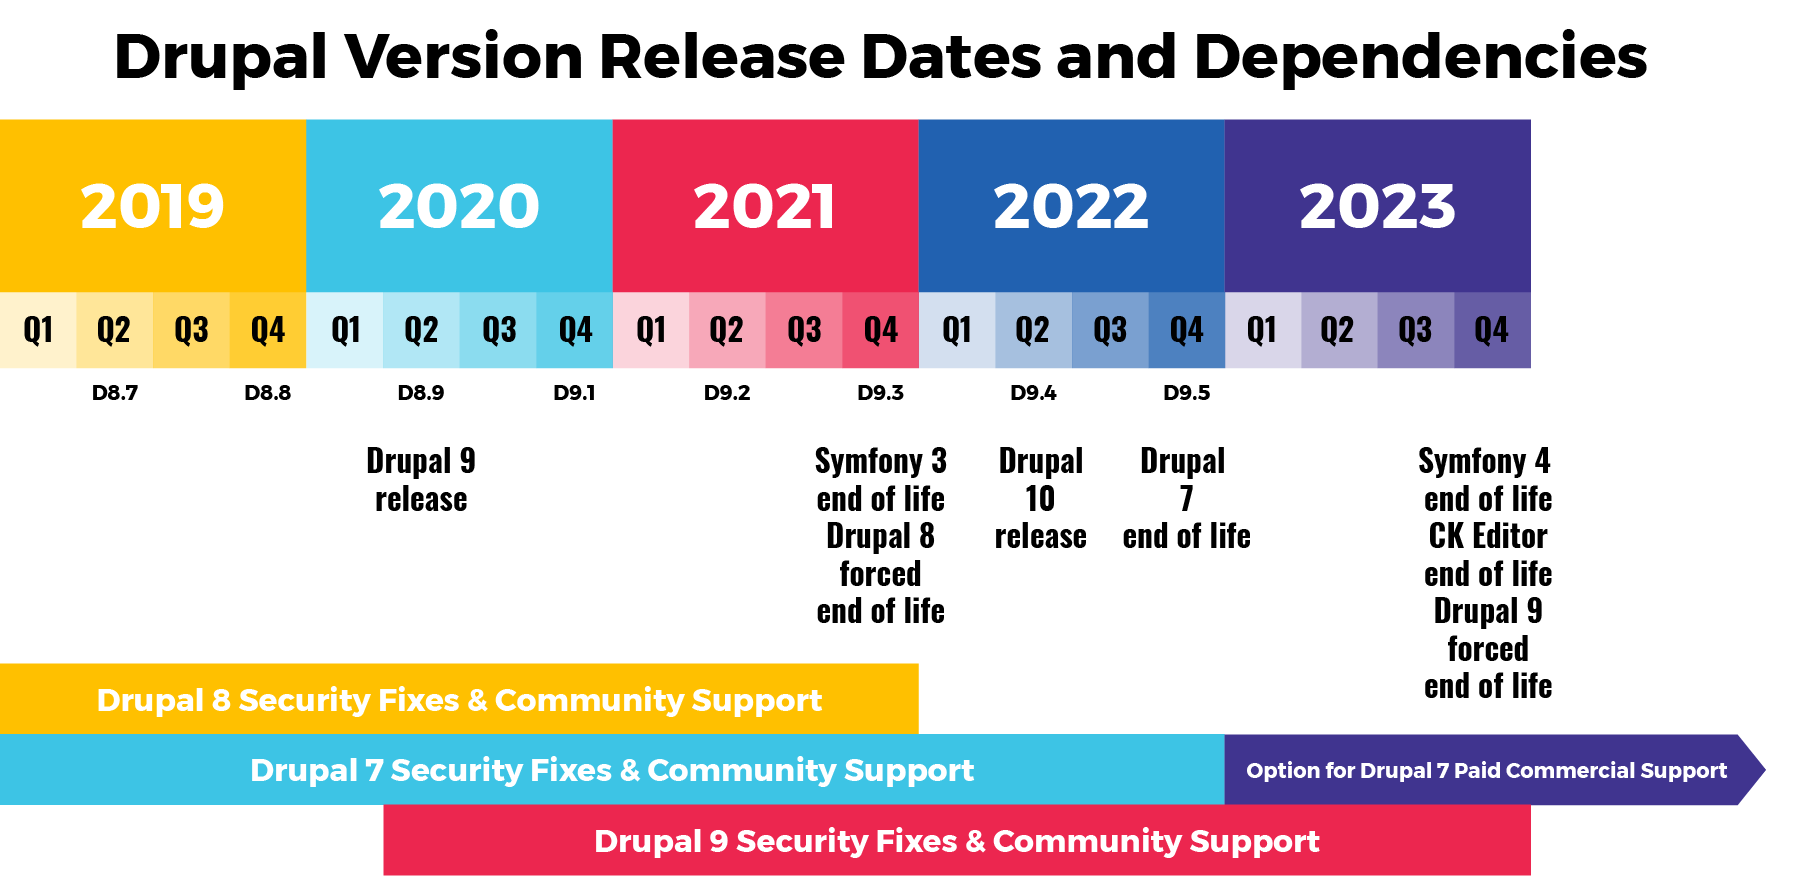 Drupal release dates and dependencies